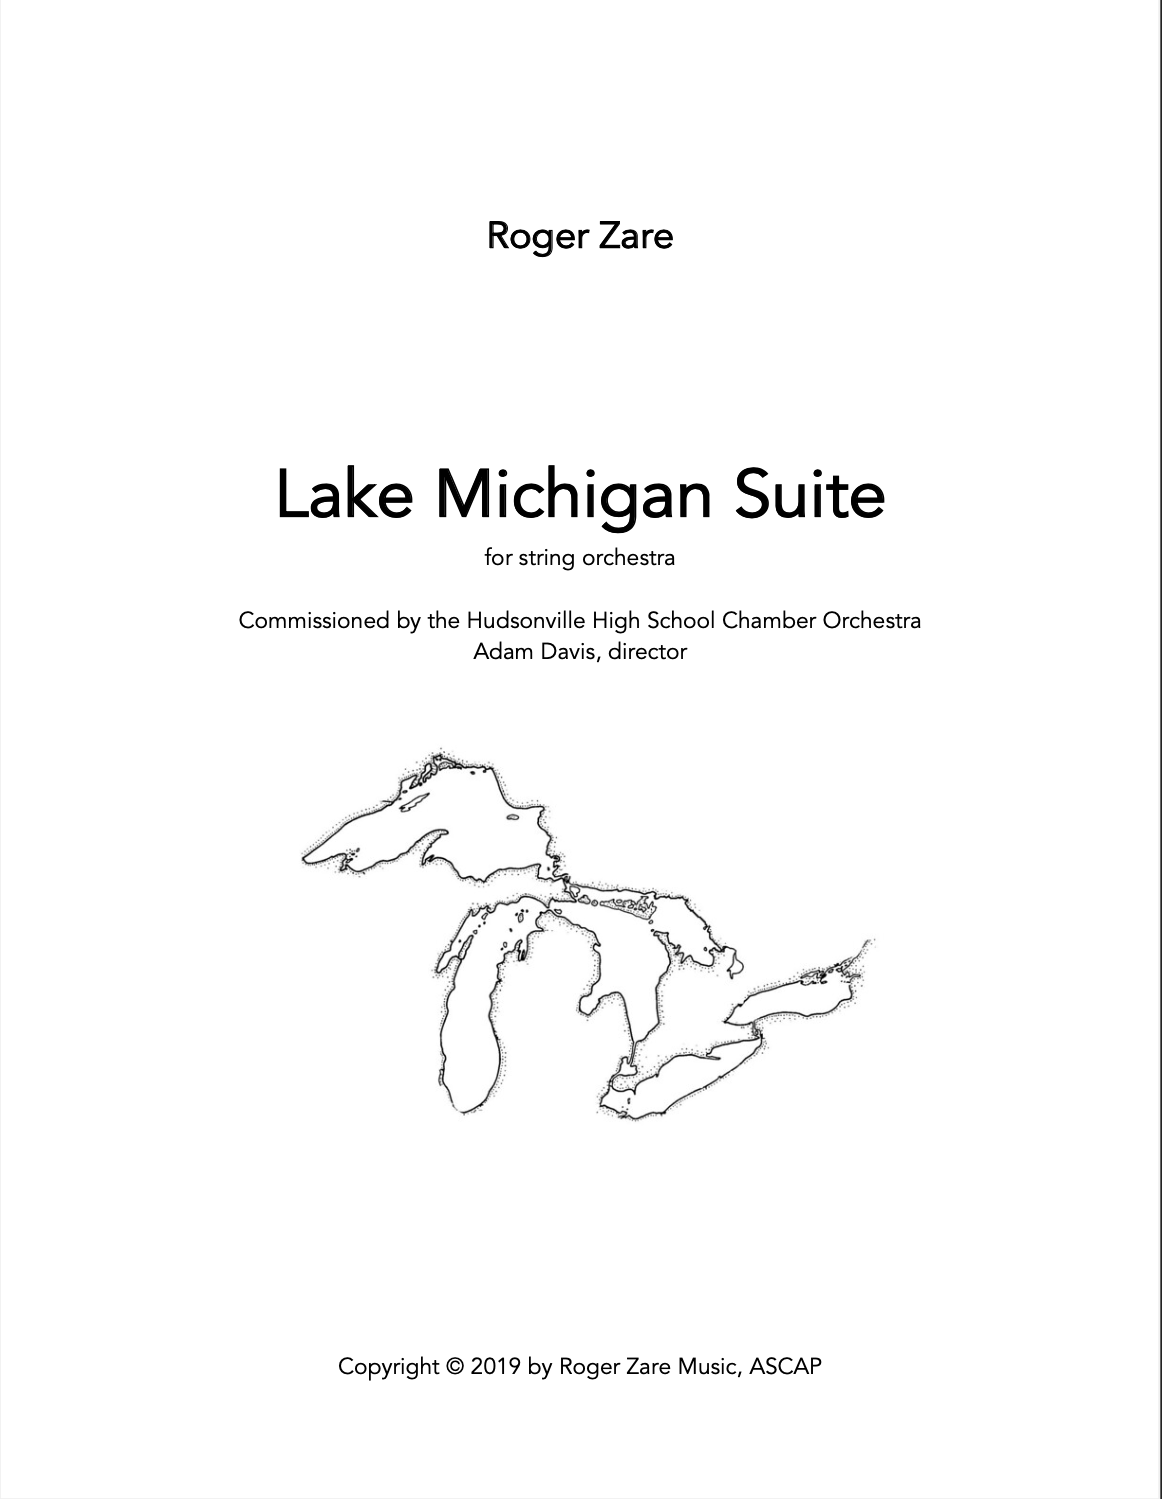 Lake Michigan Suite by Roger Zare